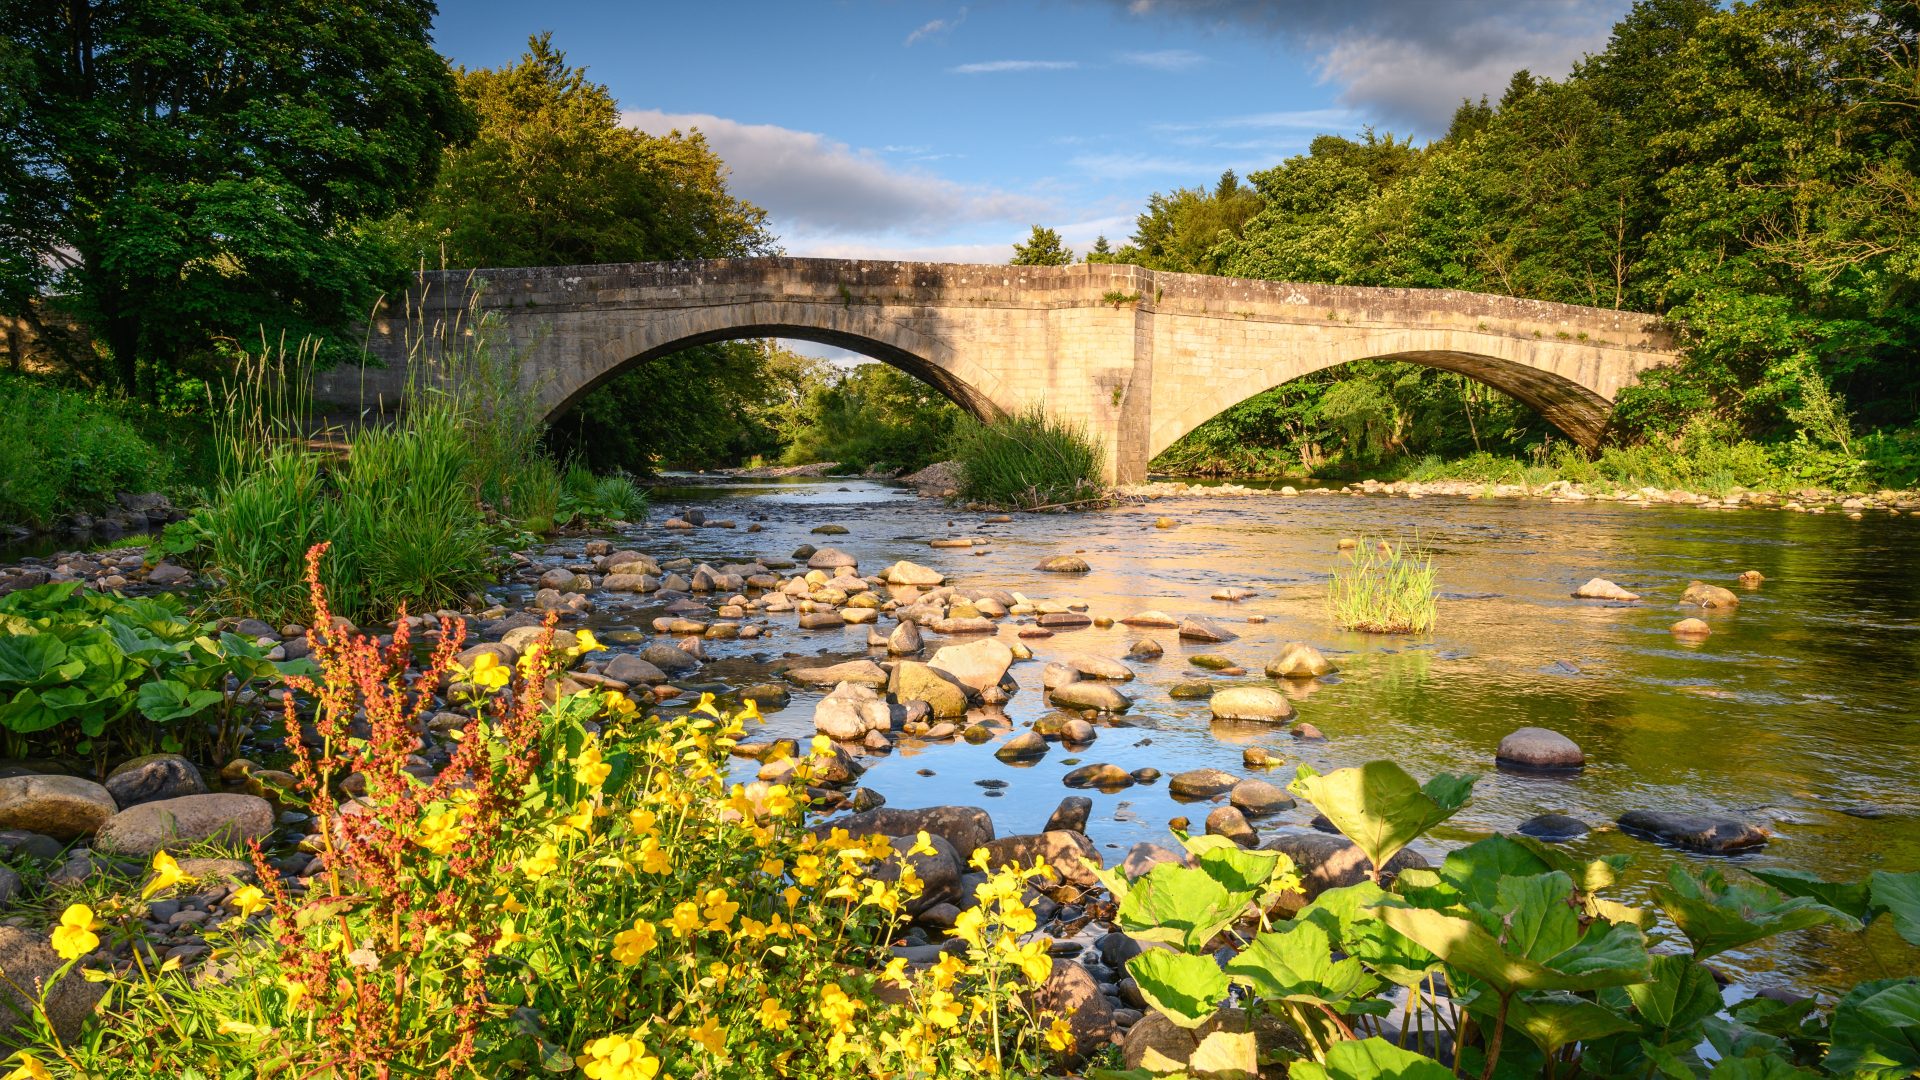 River Wear, County Durham